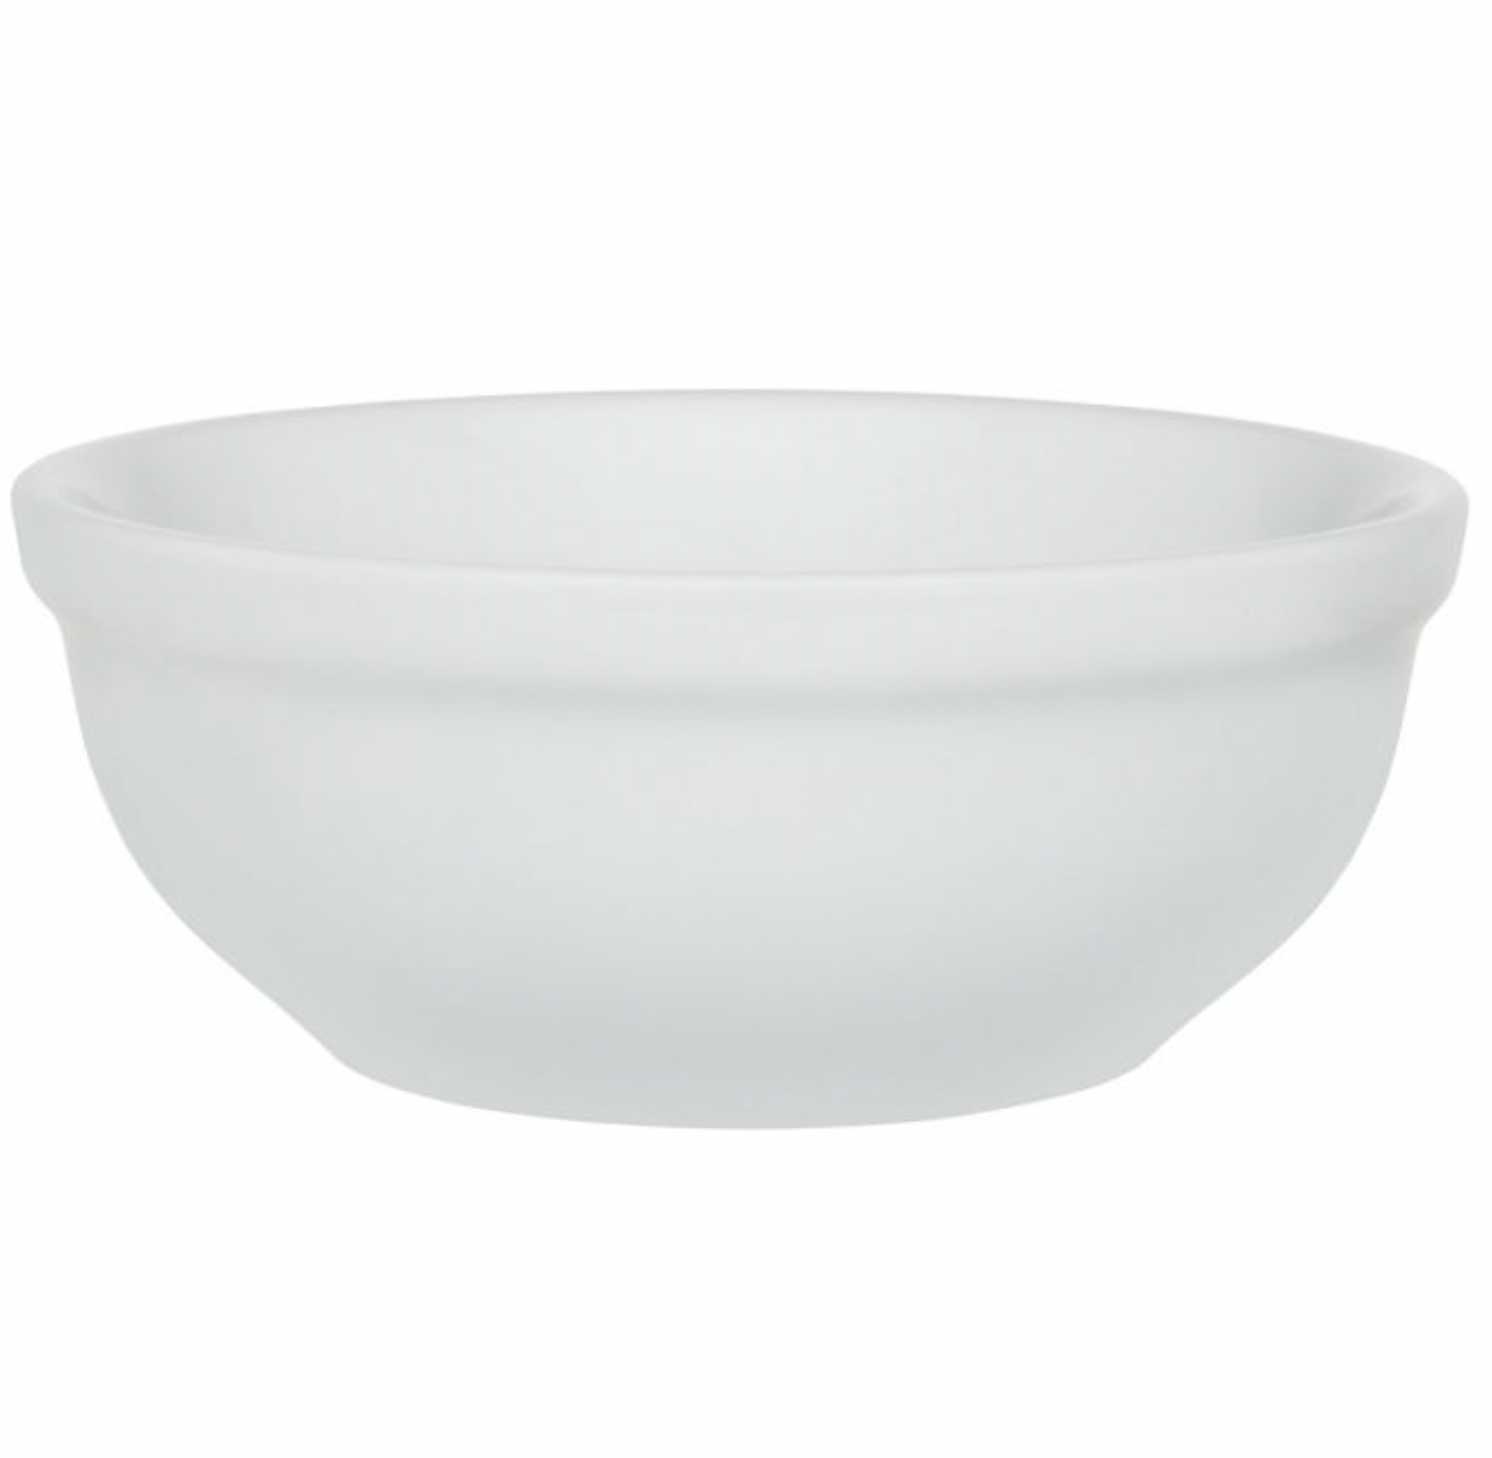 Porcelain Chili Bowl – 16oz